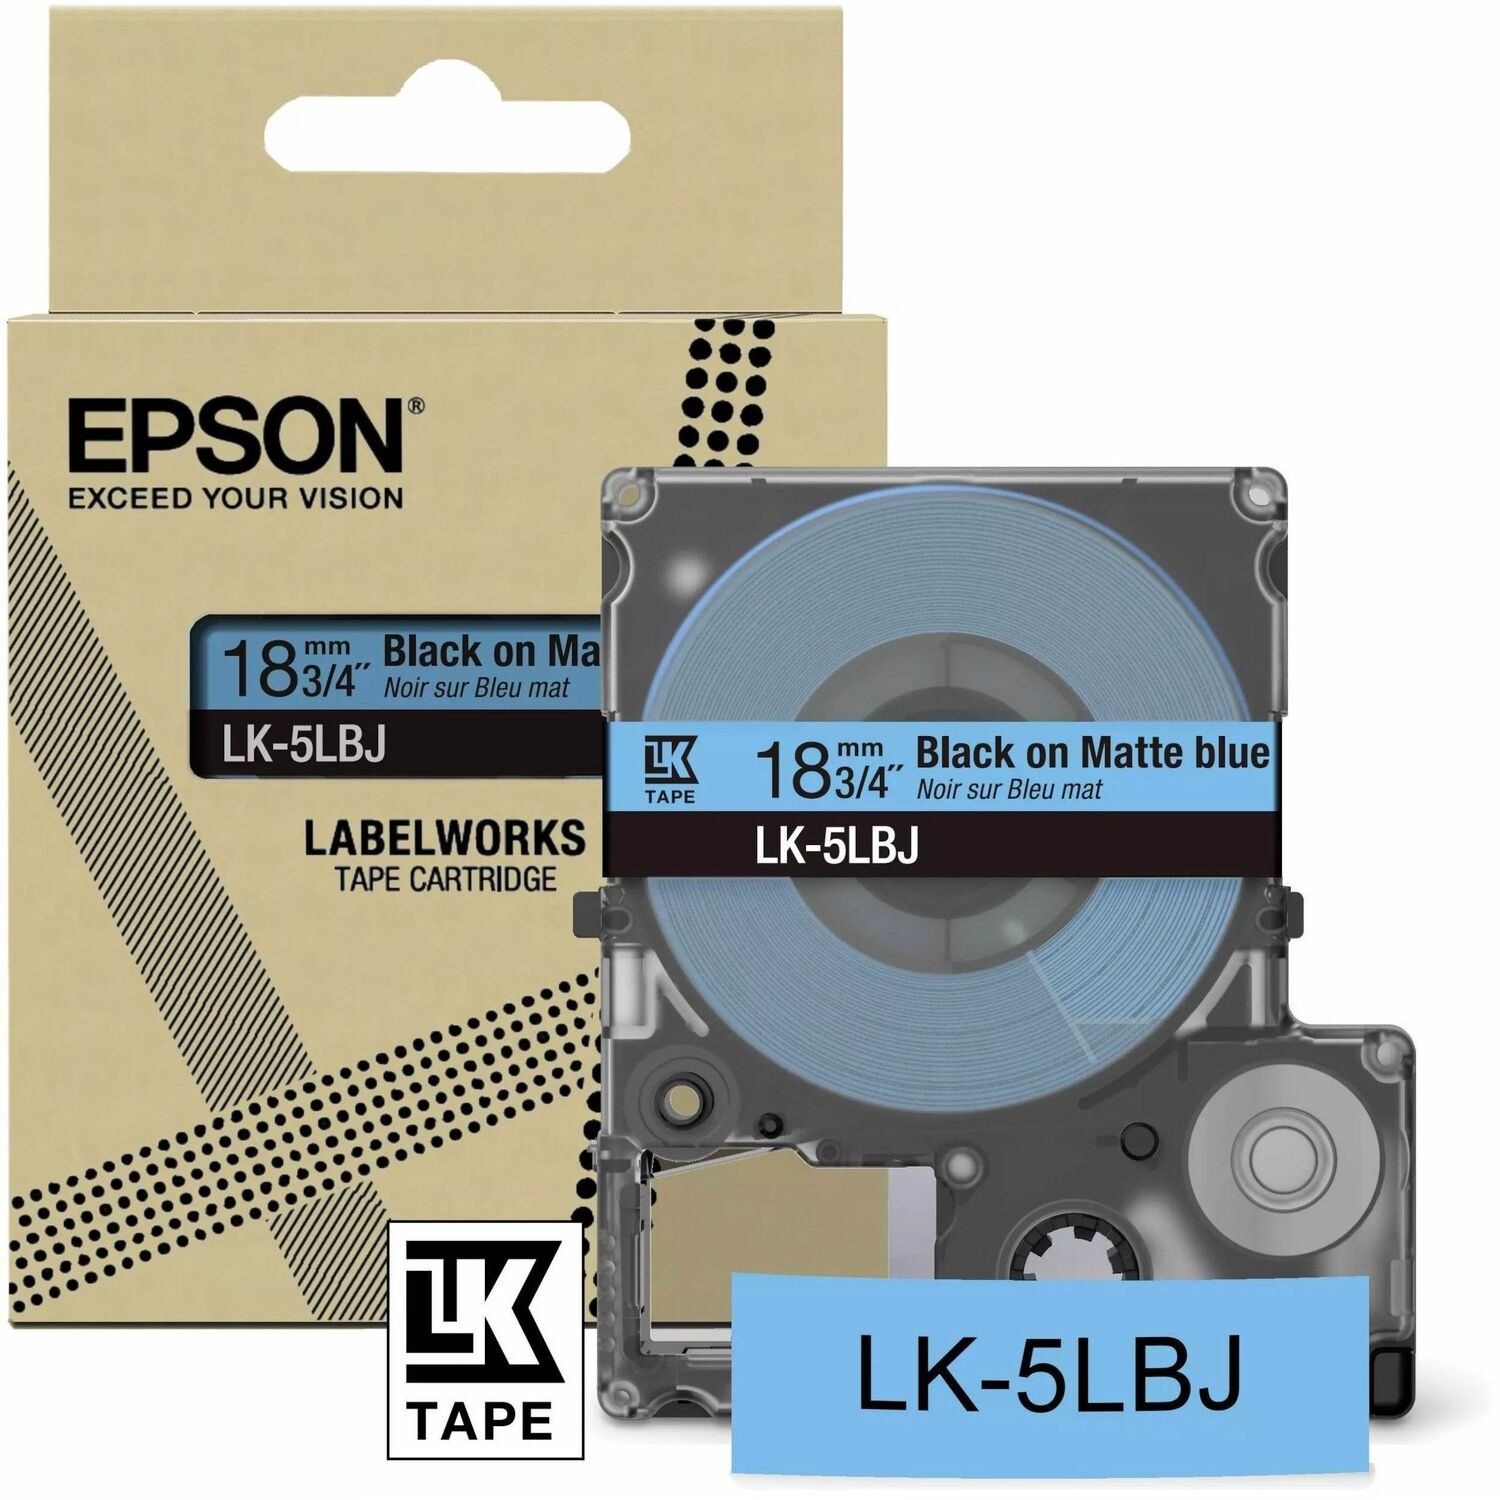 Epson LK-5LBJ Label Tape